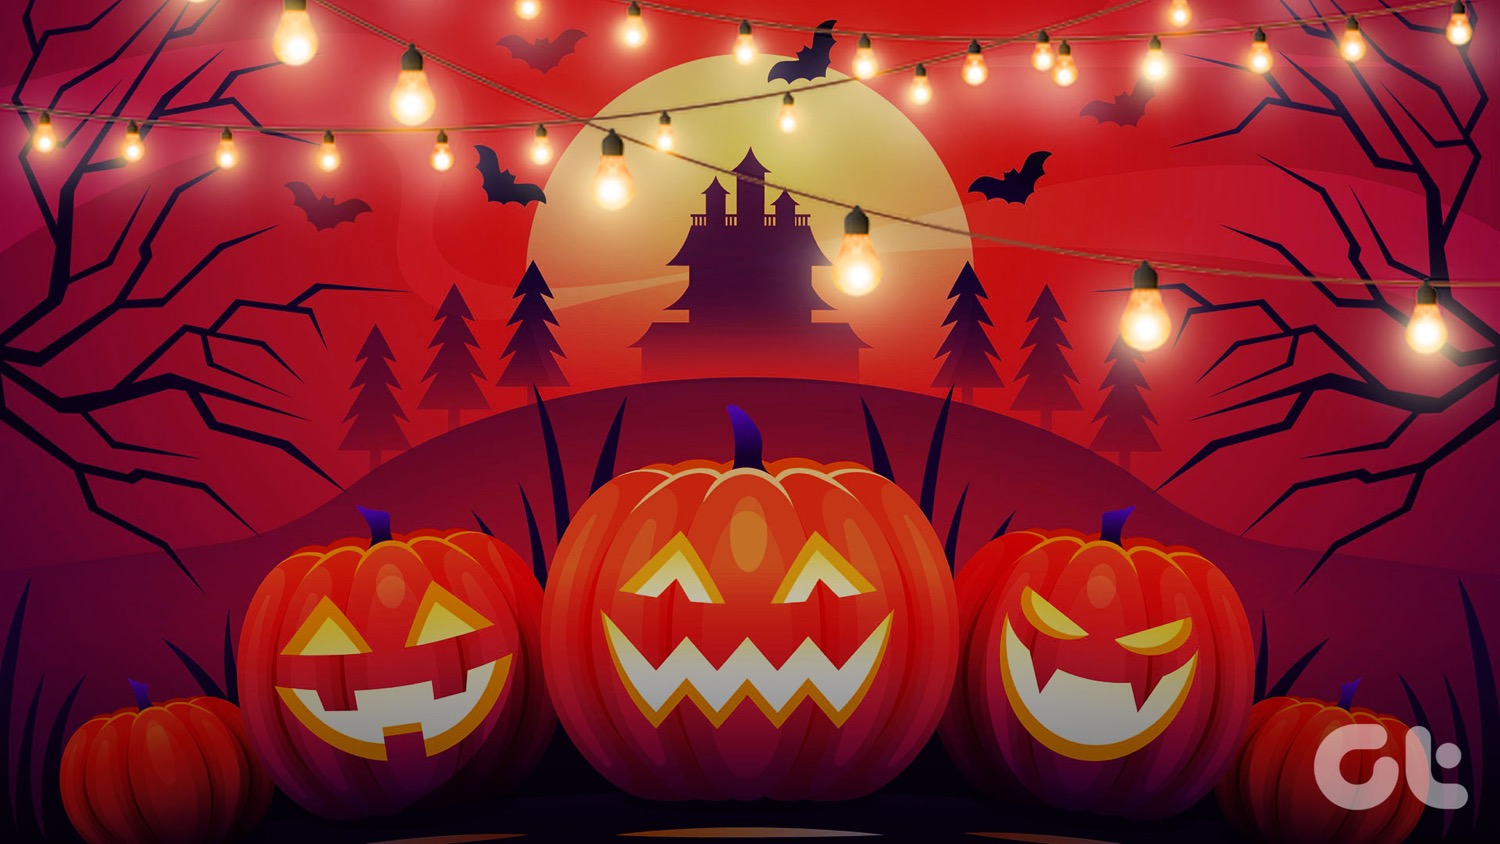 Best Creative Lights for Halloween Decorations